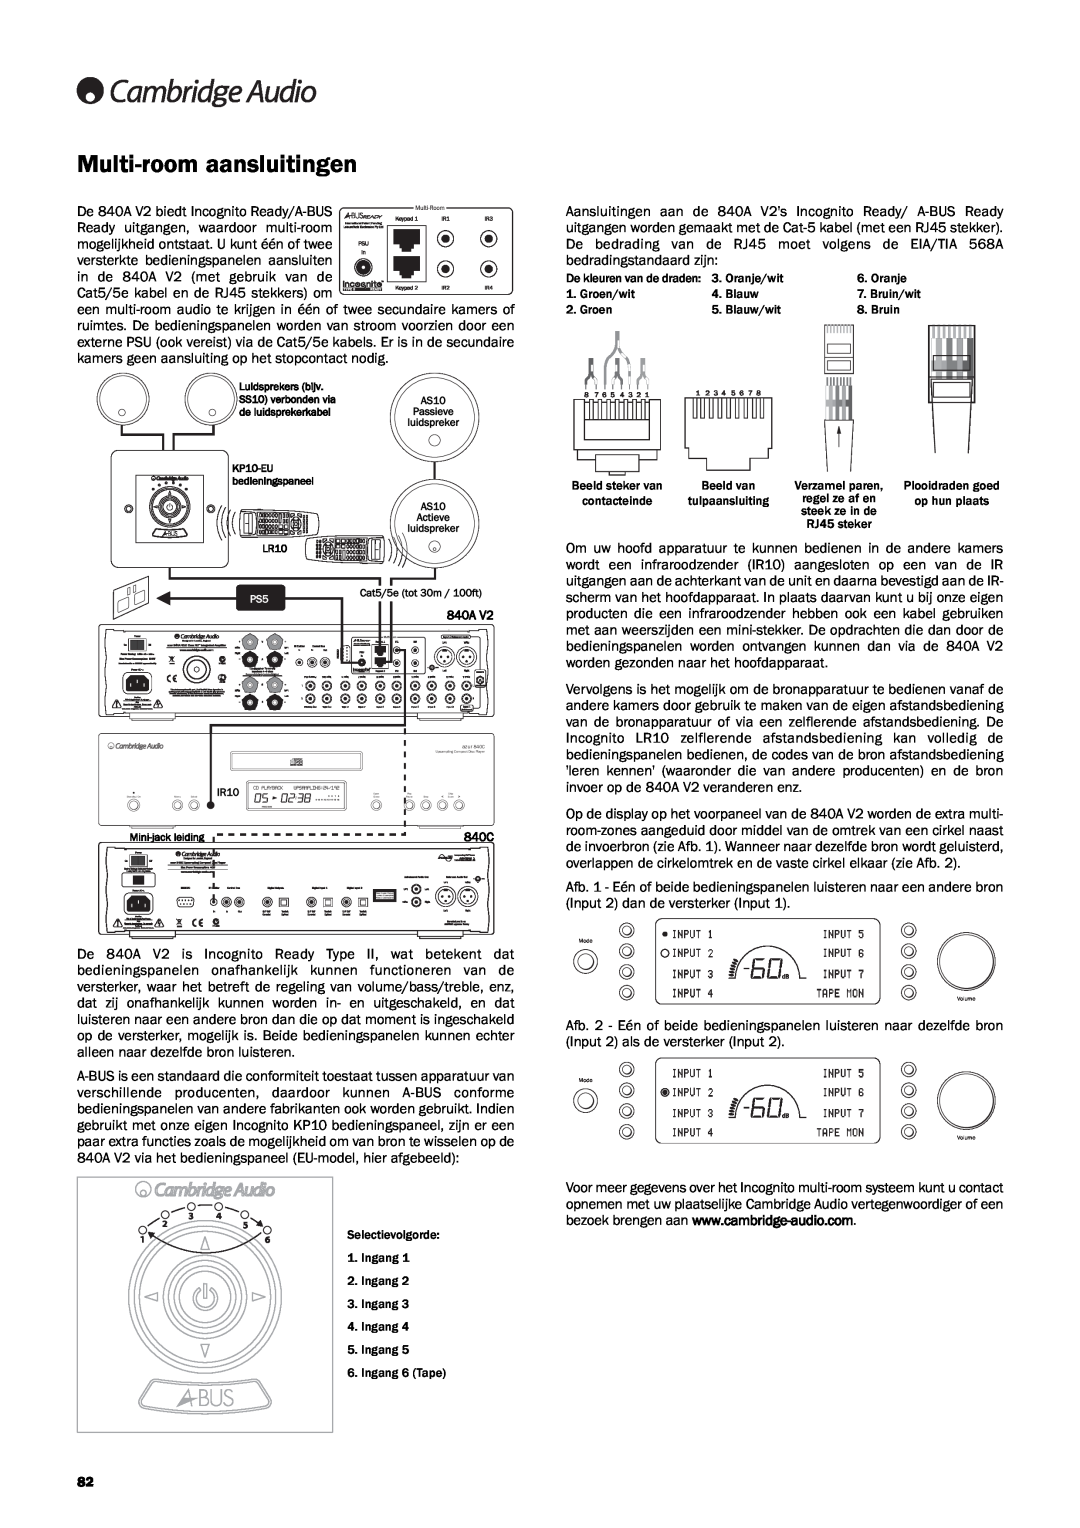 Cambridge Audio 840A V2 manual Multi-roomaansluitingen, 840C 